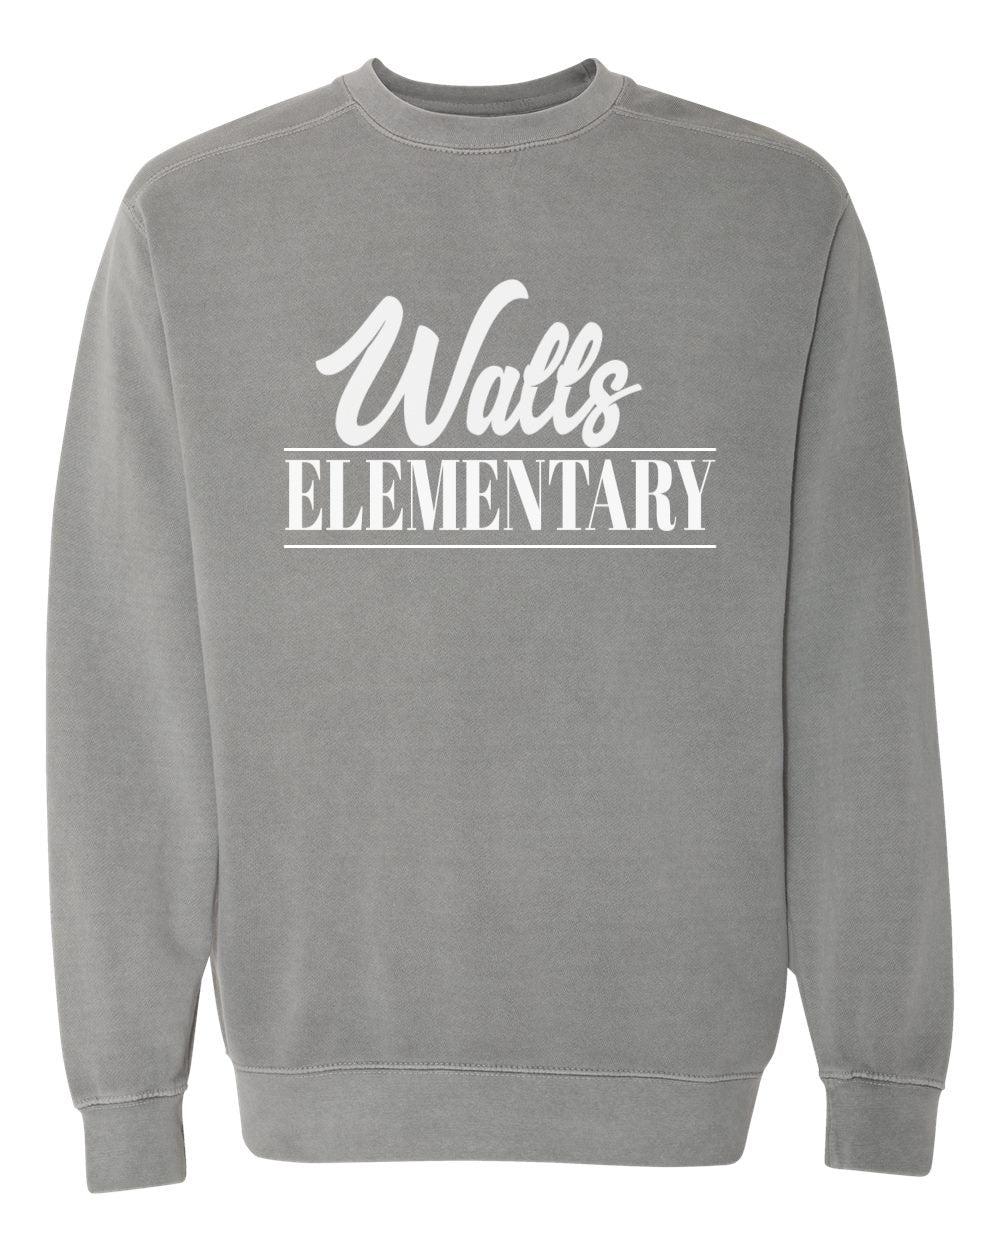 Walls Elementary Comfort Colors Sweatshirts